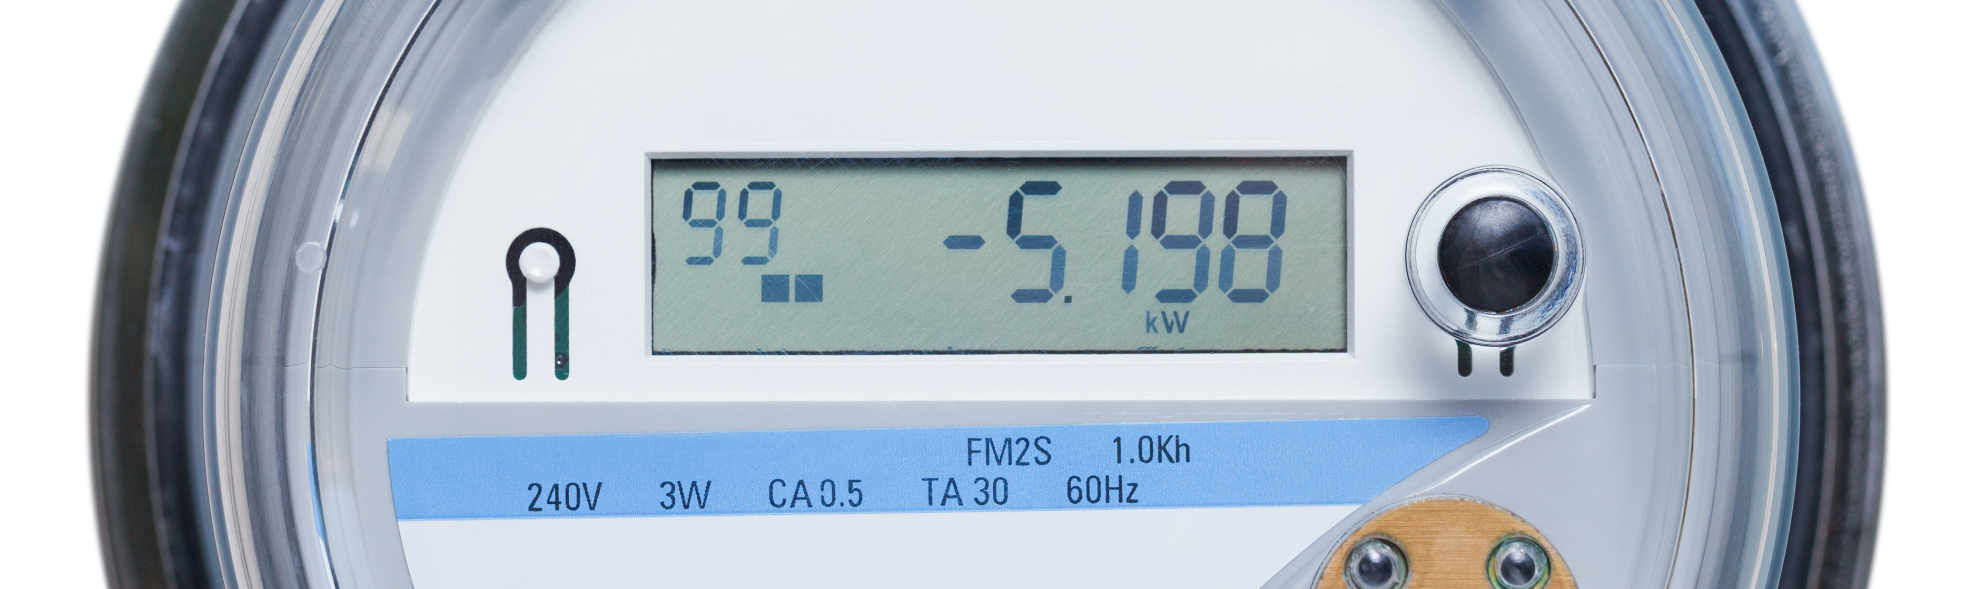 close up of smart meter